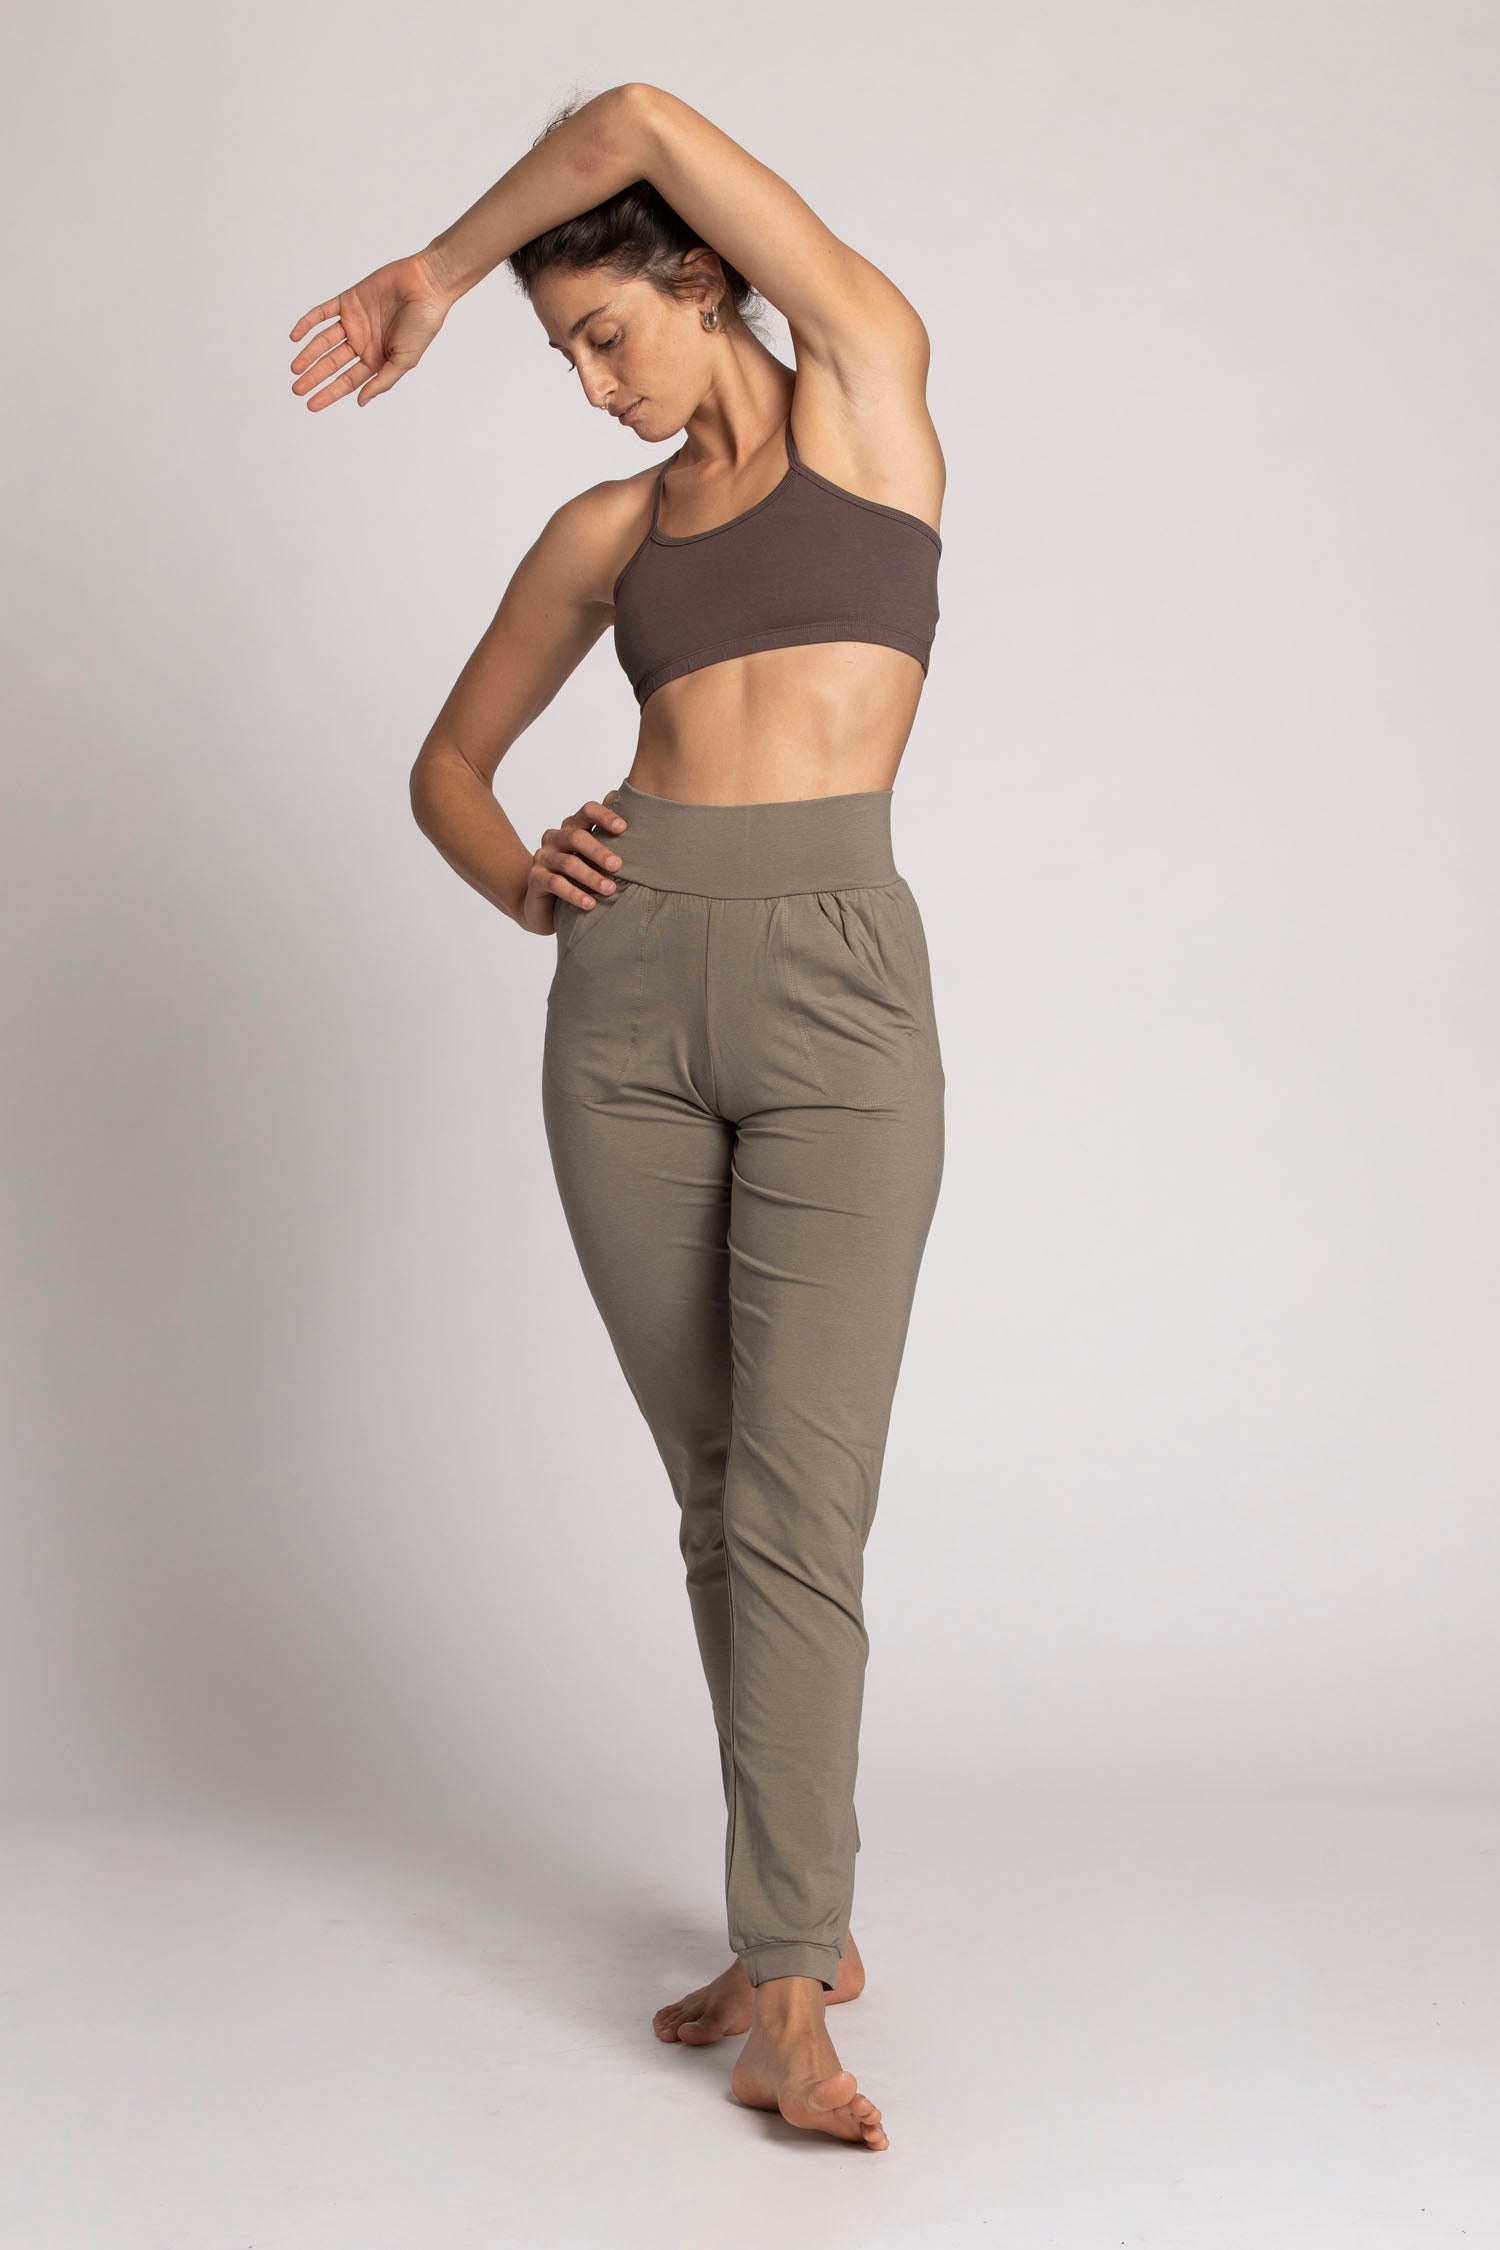 Baocc Yoga Pants Women, Women's Fashion Fitness Sports Casual Pants Yoga  Loose Athletic Pants Pants for Women Dark Gray L